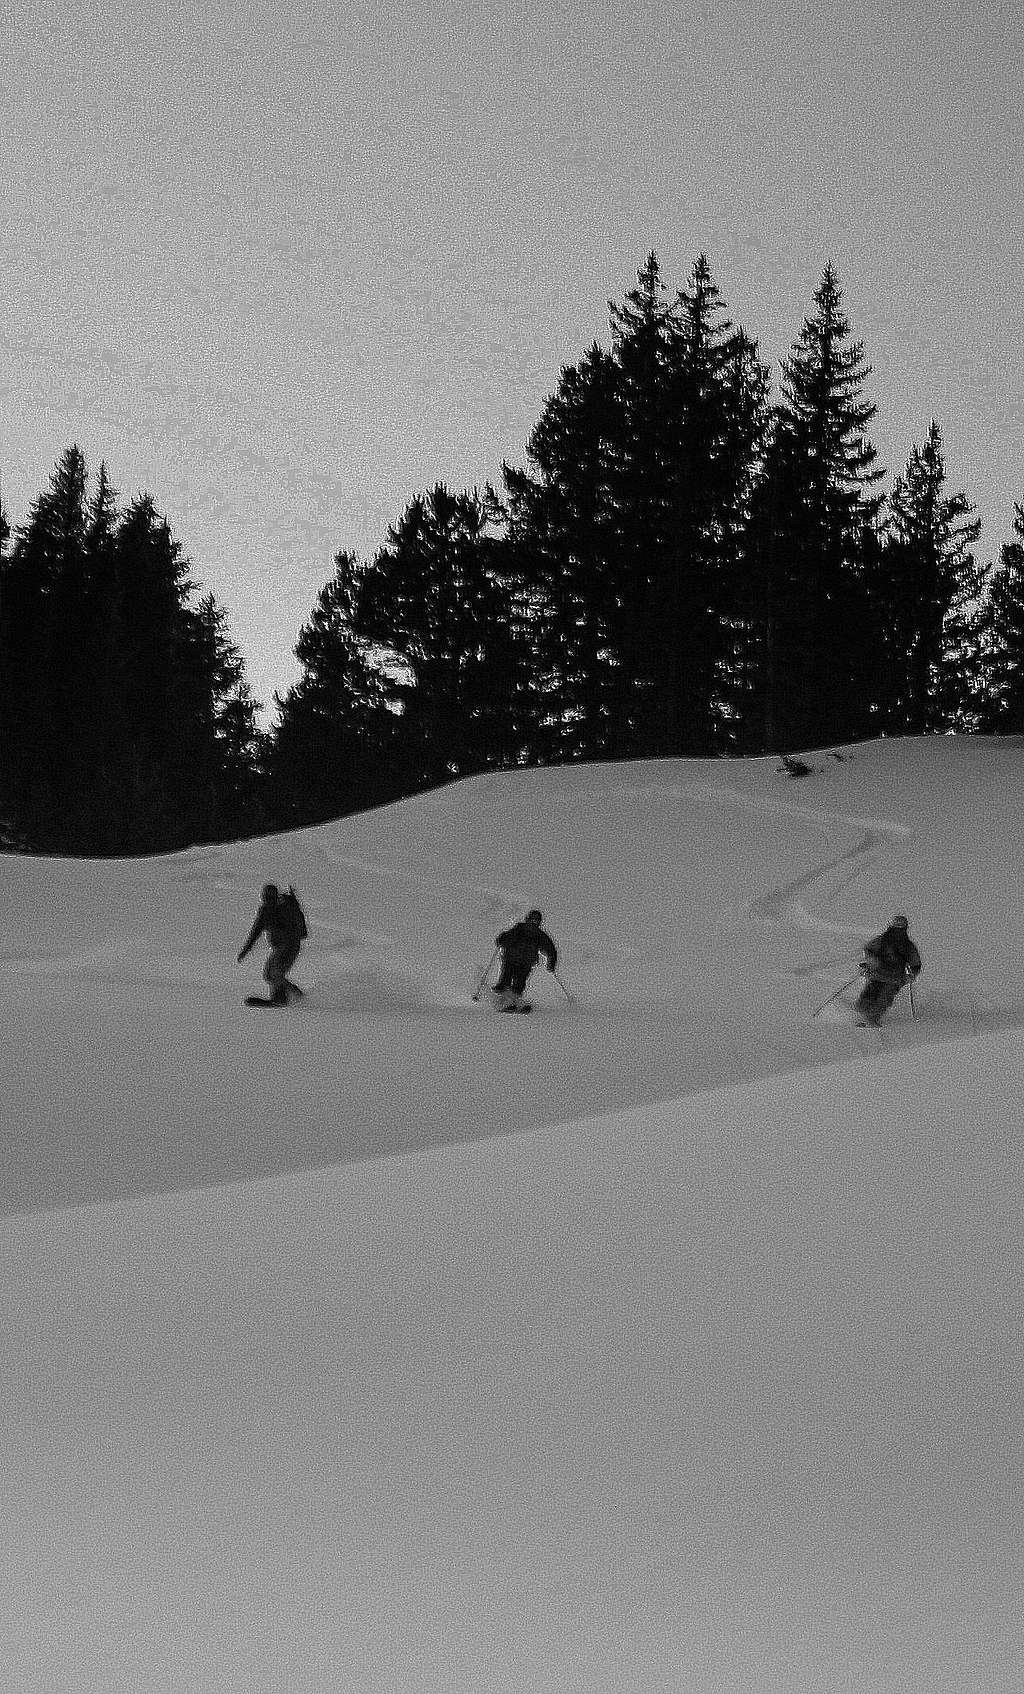 The group ski shot